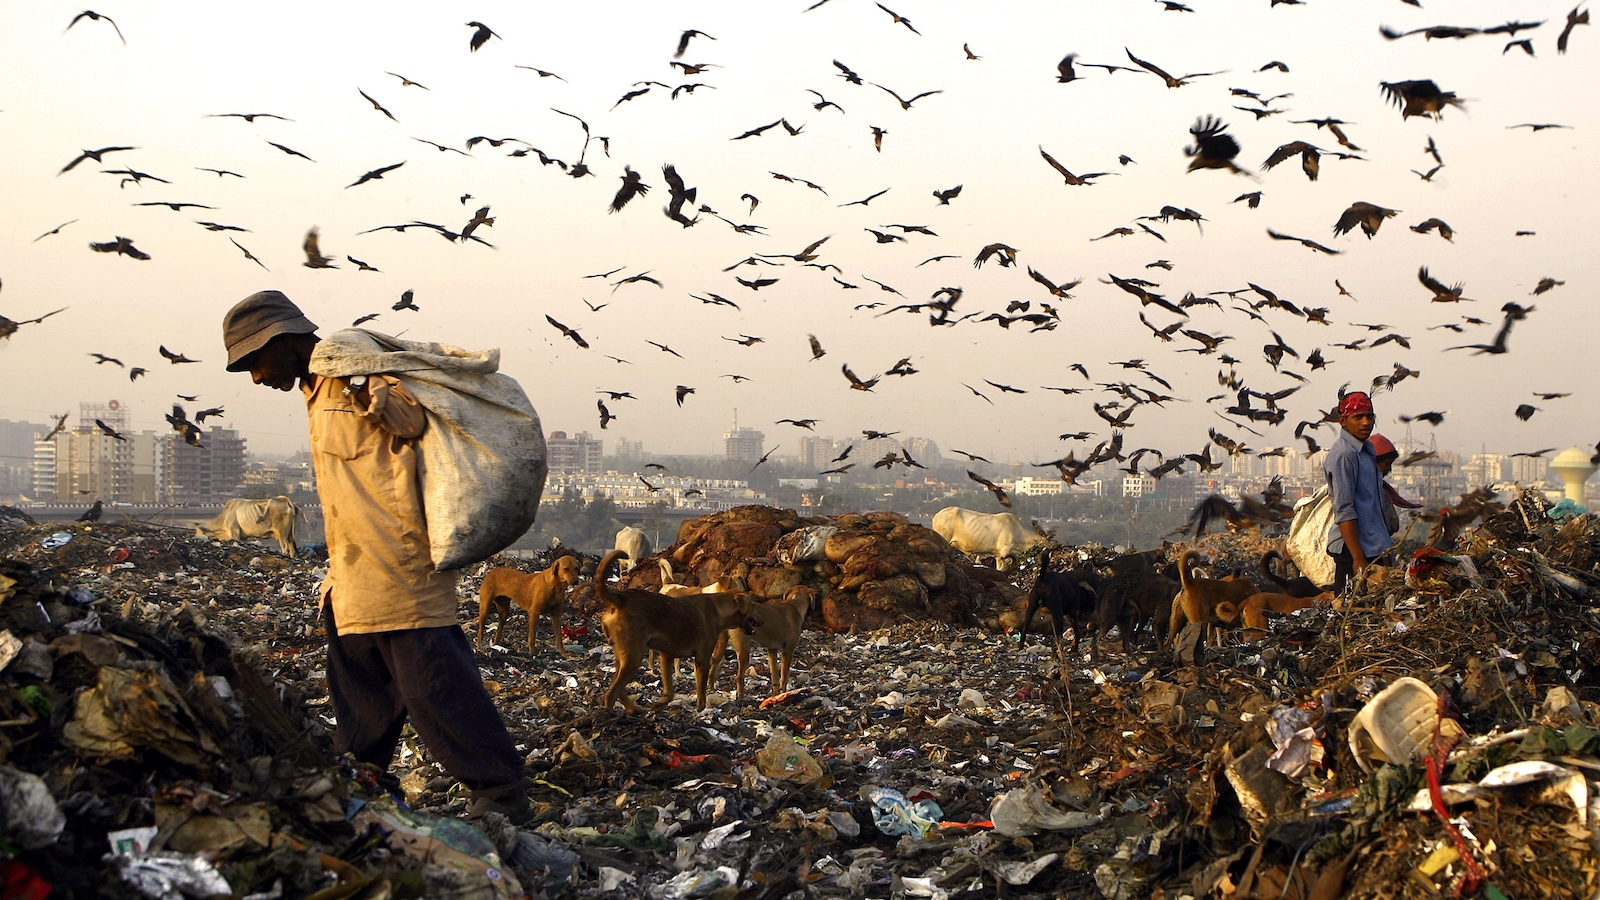 Man walks in a landfill with birds fluttering